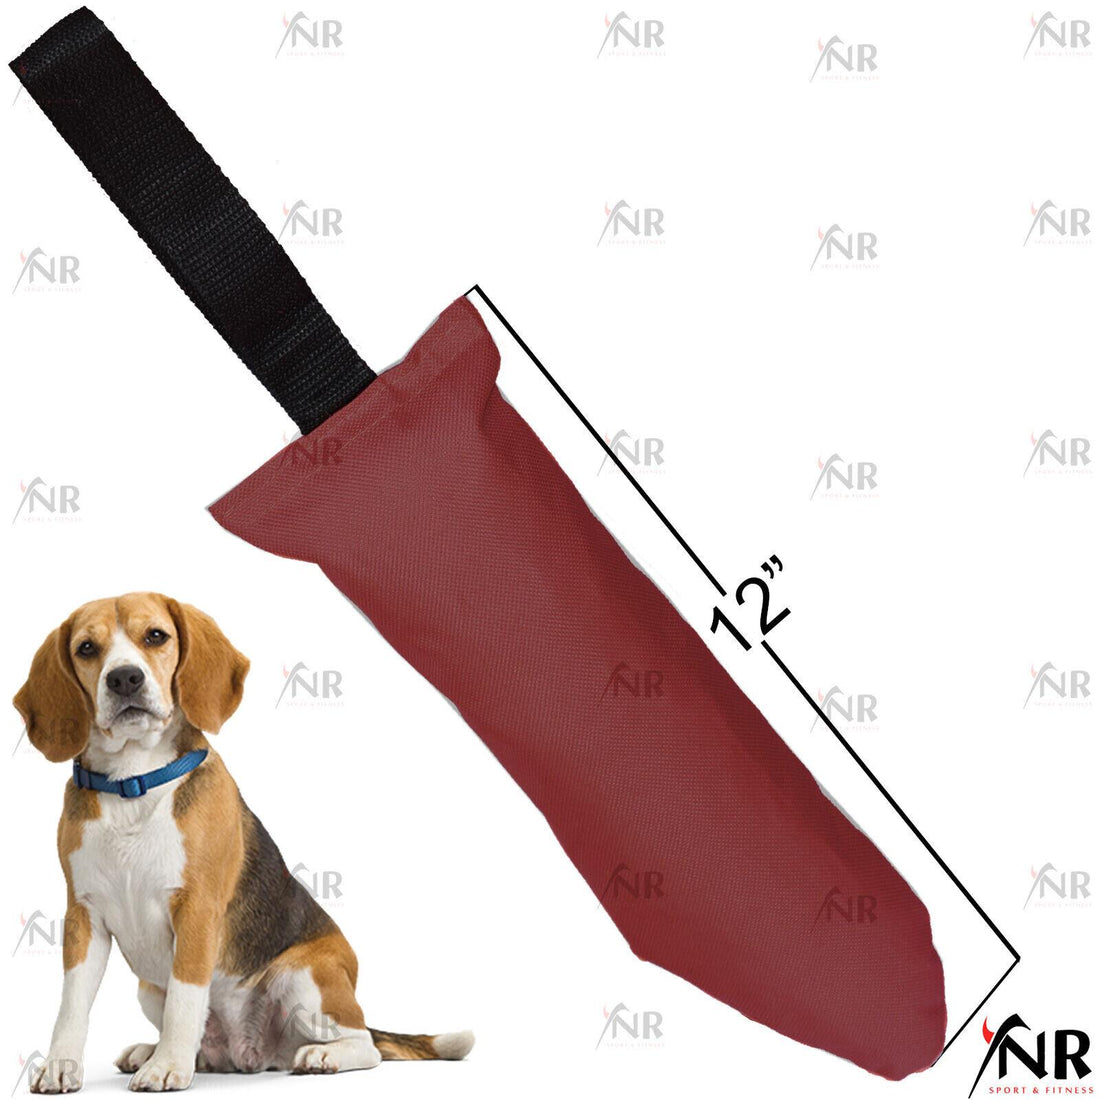 YNR Dog Bite Training Tug Puppy Biting Pet Chewing Playing Toy Police K9 Schutzhund